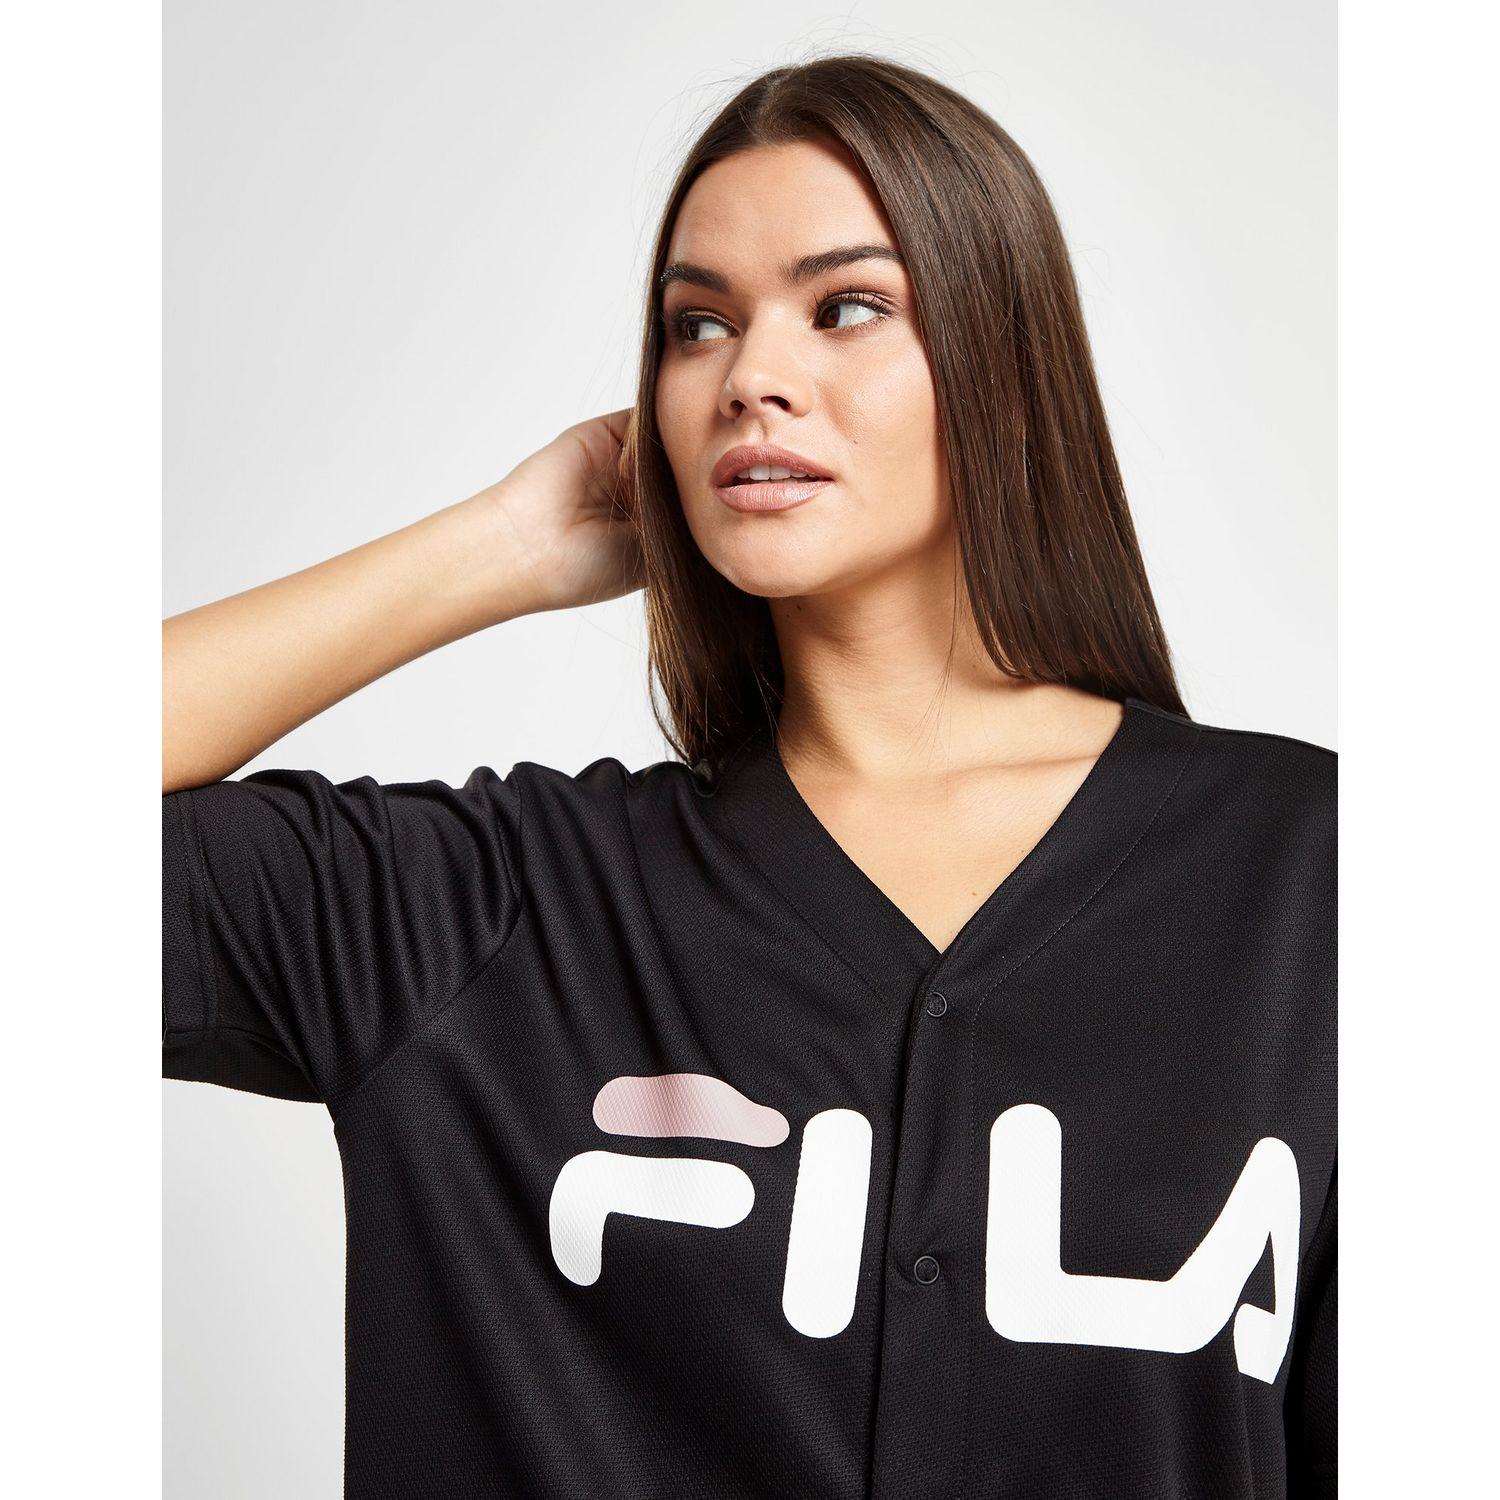 Fila Cotton Mesh Baseball T-shirt in Black/White/Pink (Black) - Lyst